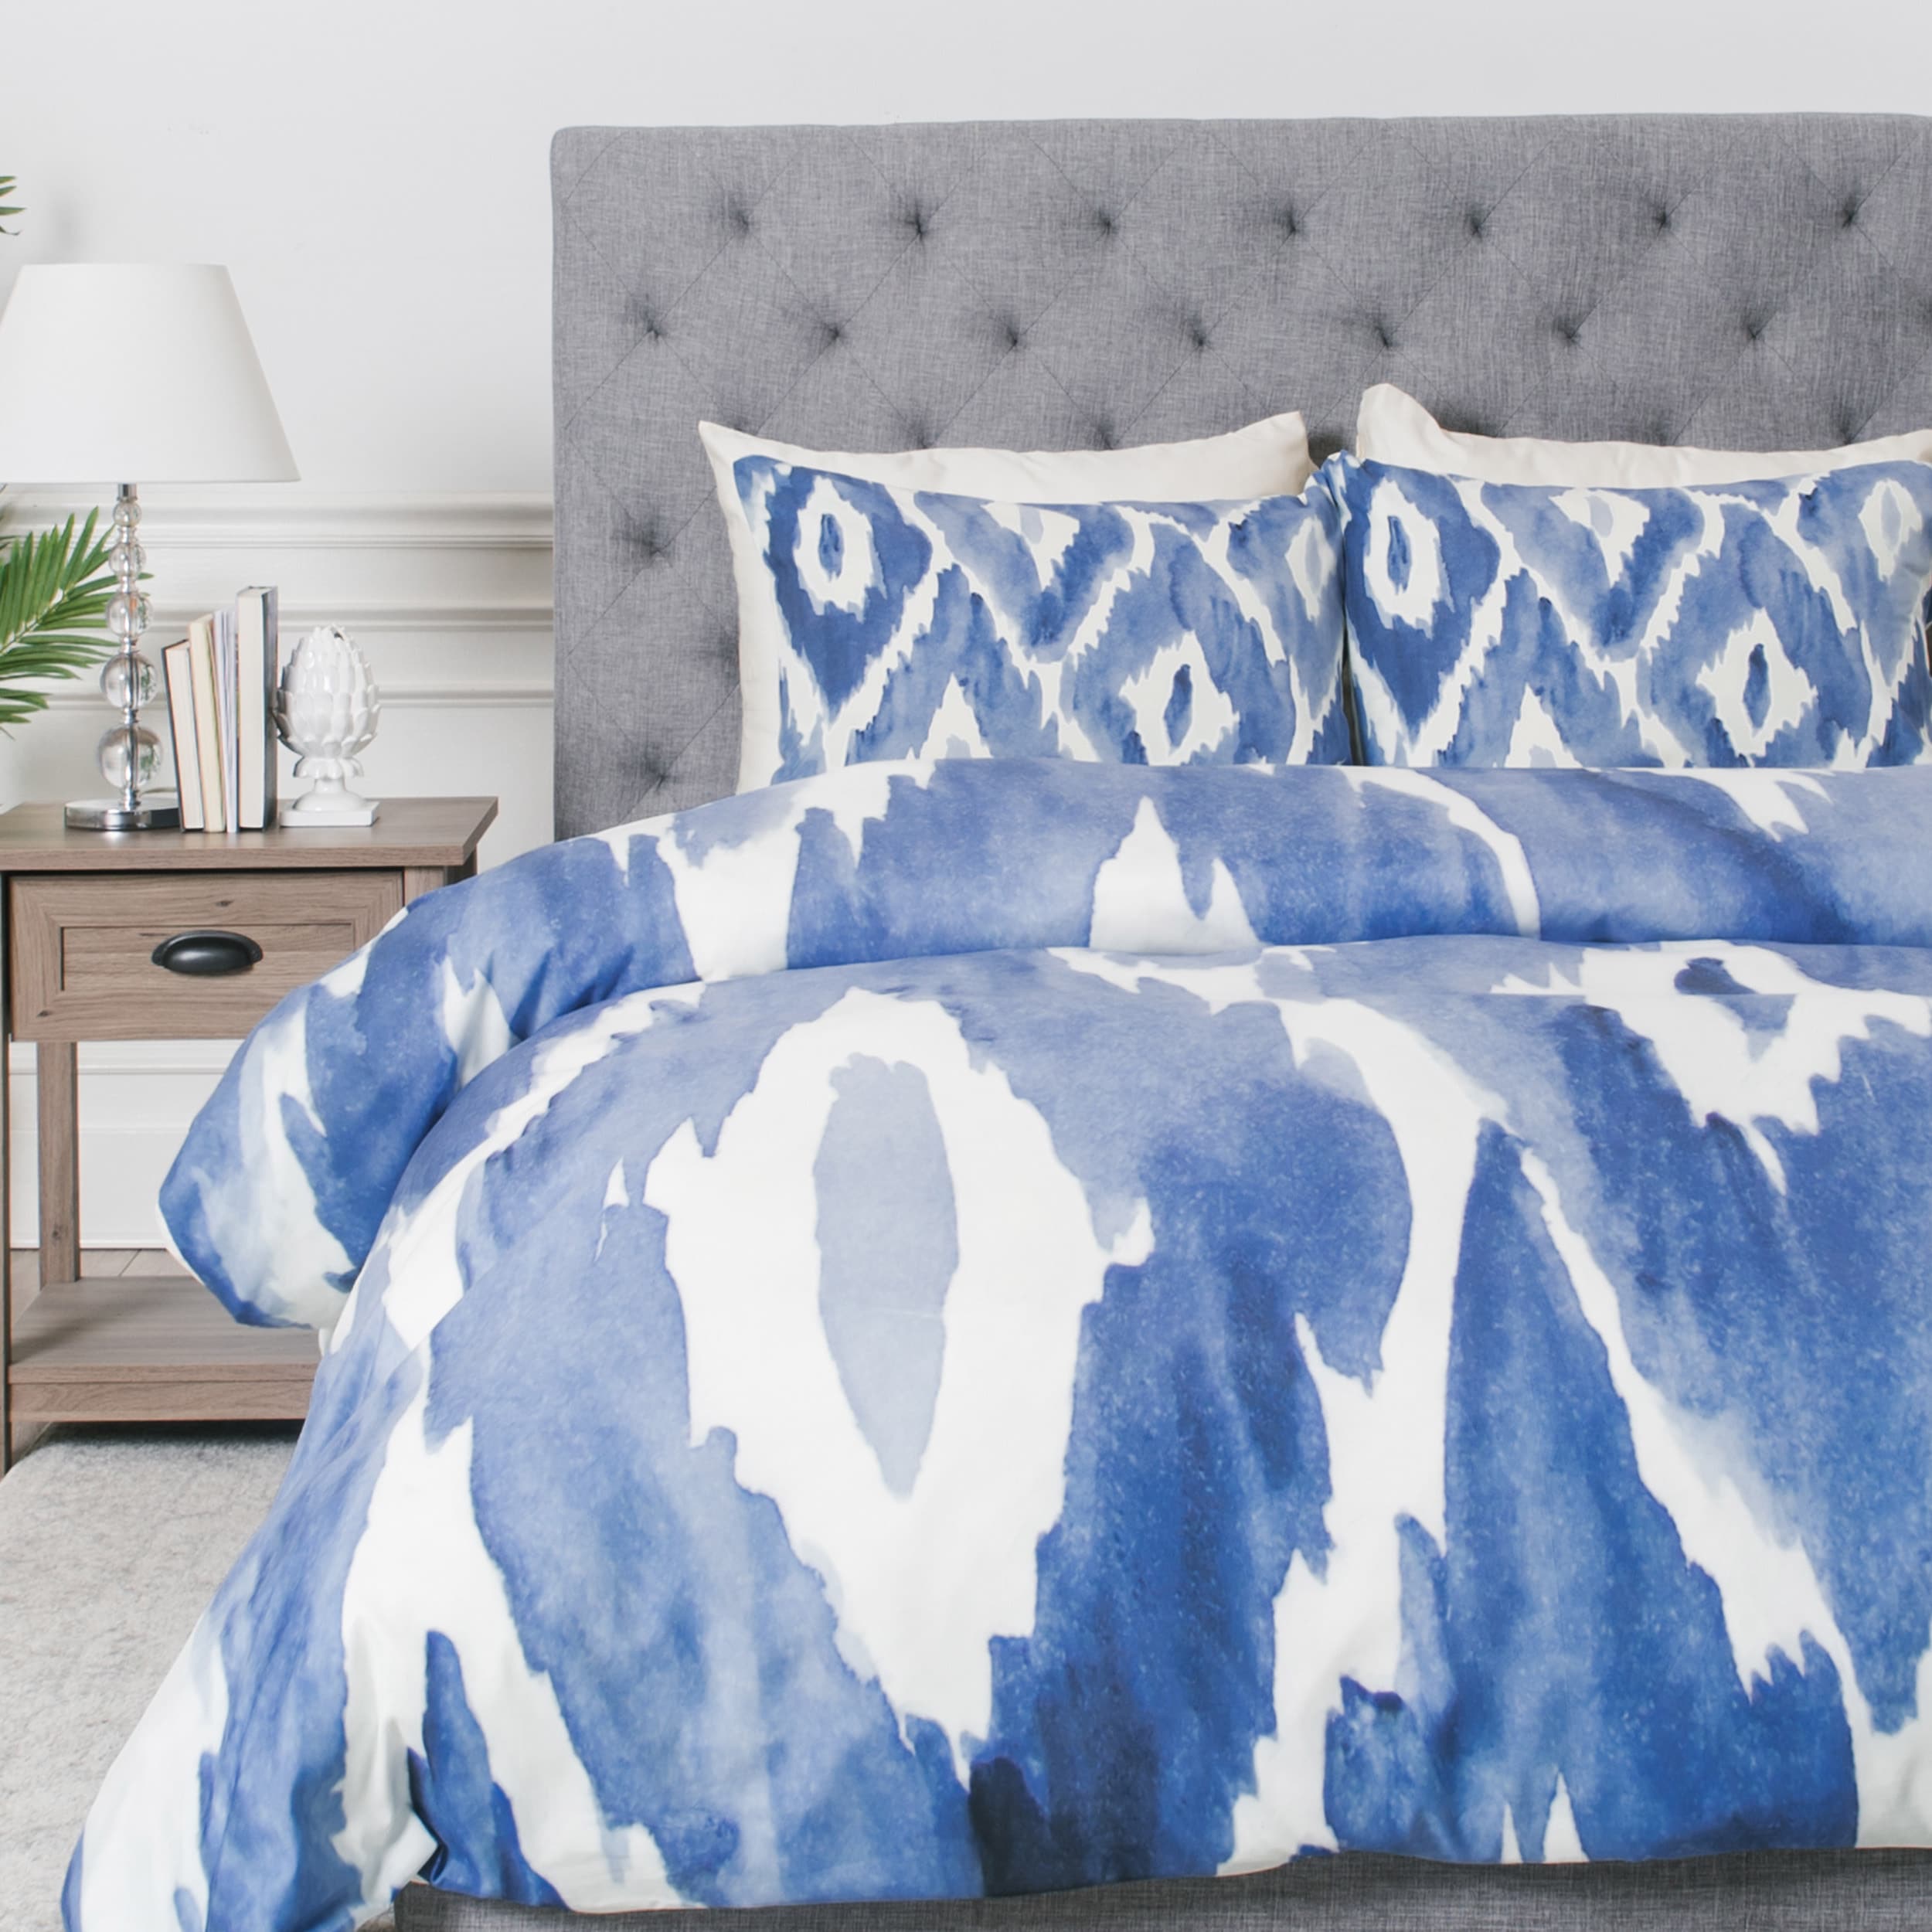 Blue Ikat Duvet Covers Sets Find Great Bedding Deals Shopping